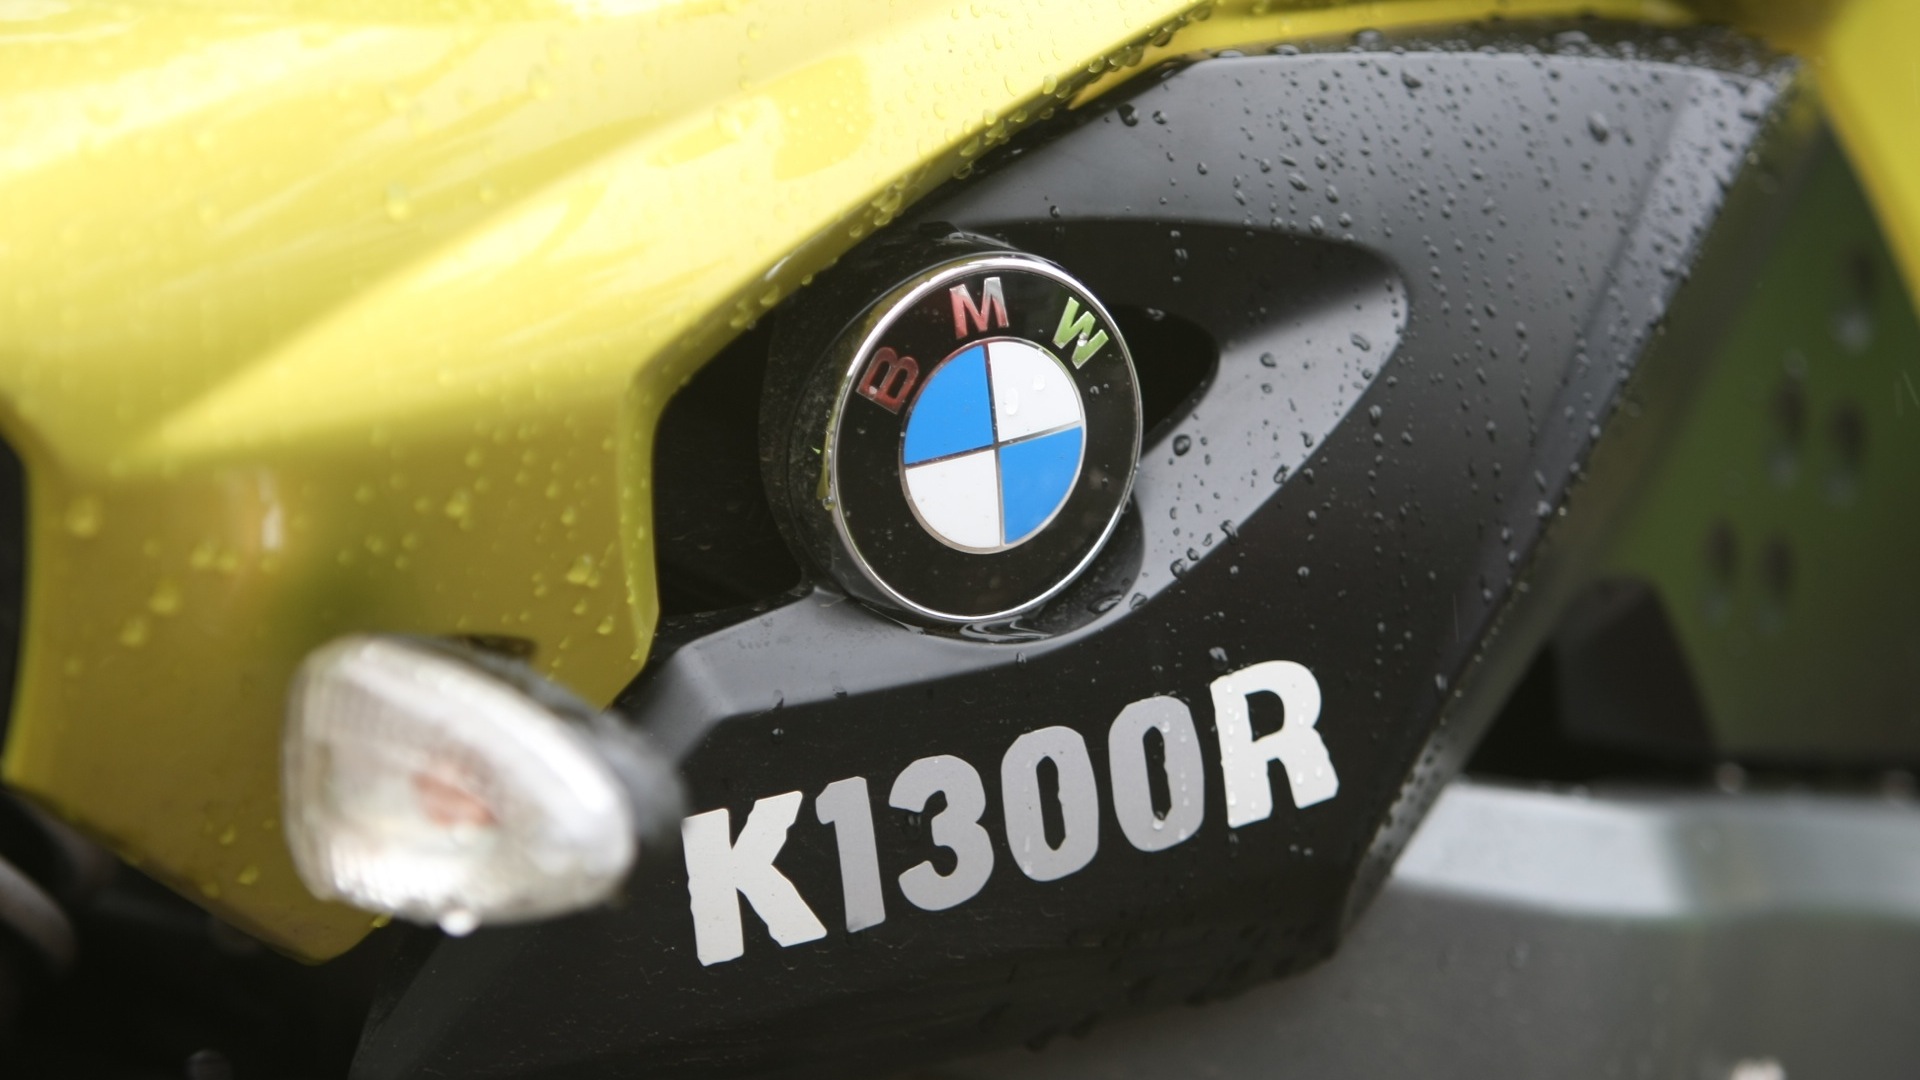 BMW K 1300 2013 R Exterior